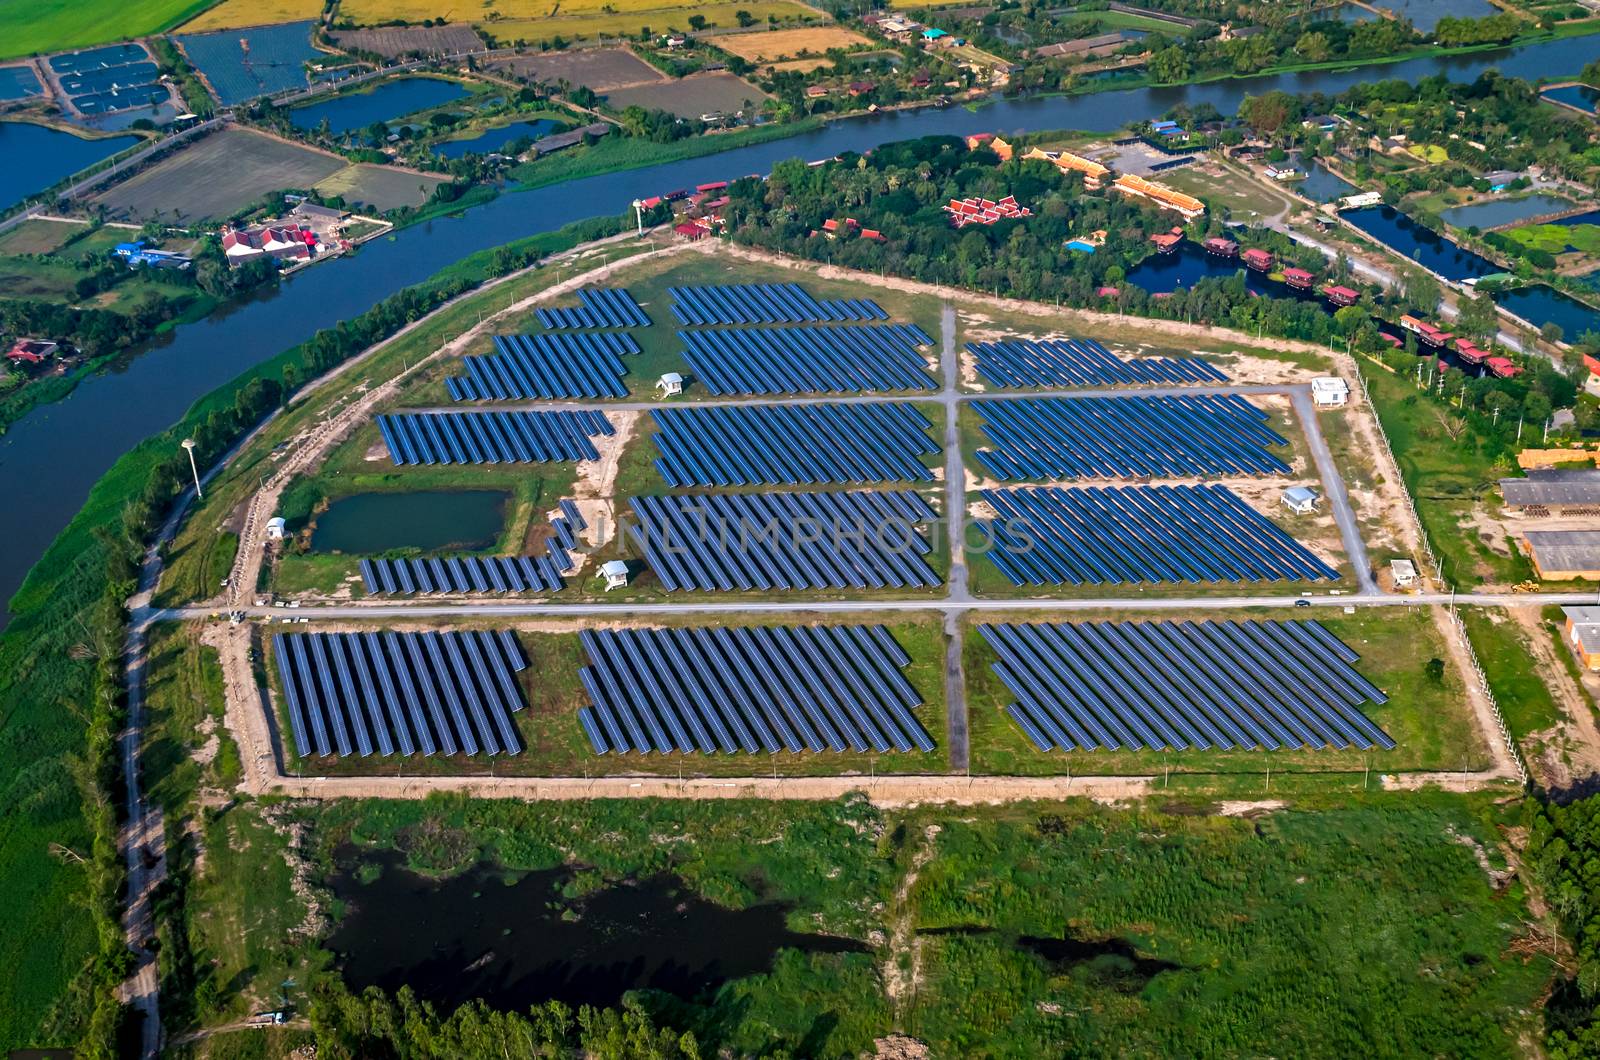 Solar farm solar panels aerial photo from the air outside the Bangkok Thailand